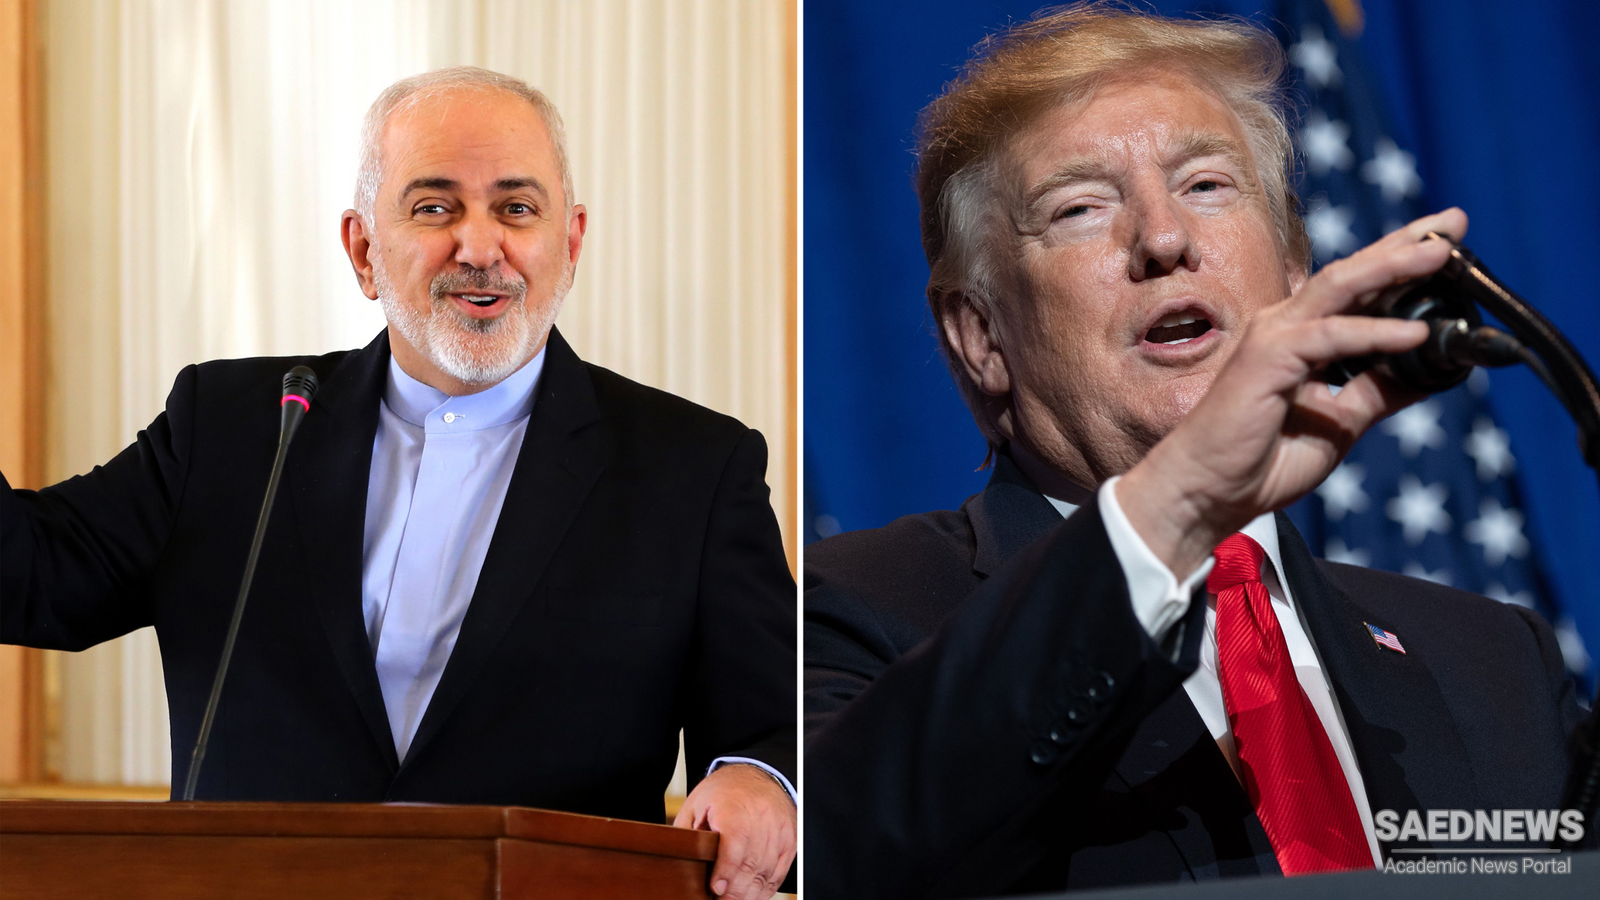 Iran's Foreign Minister Javad Zarif Retorts Trump's Baseless Allegations